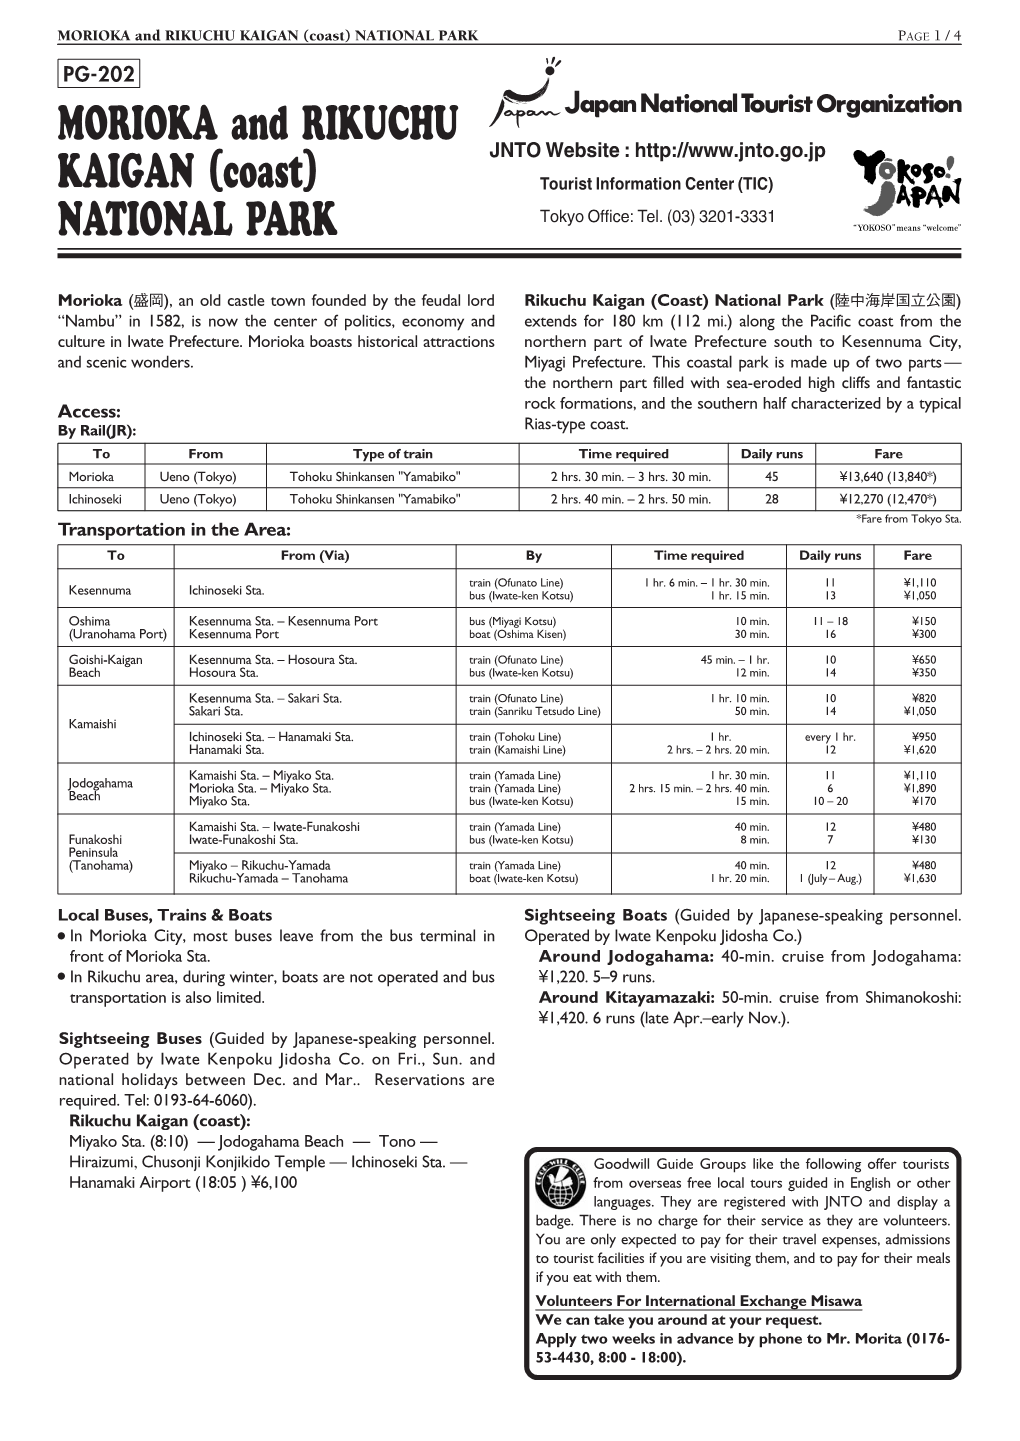 MORIOKA and RIKUCHU KAIGAN (Coast) NATIONAL PARK PAGE 1/ 4